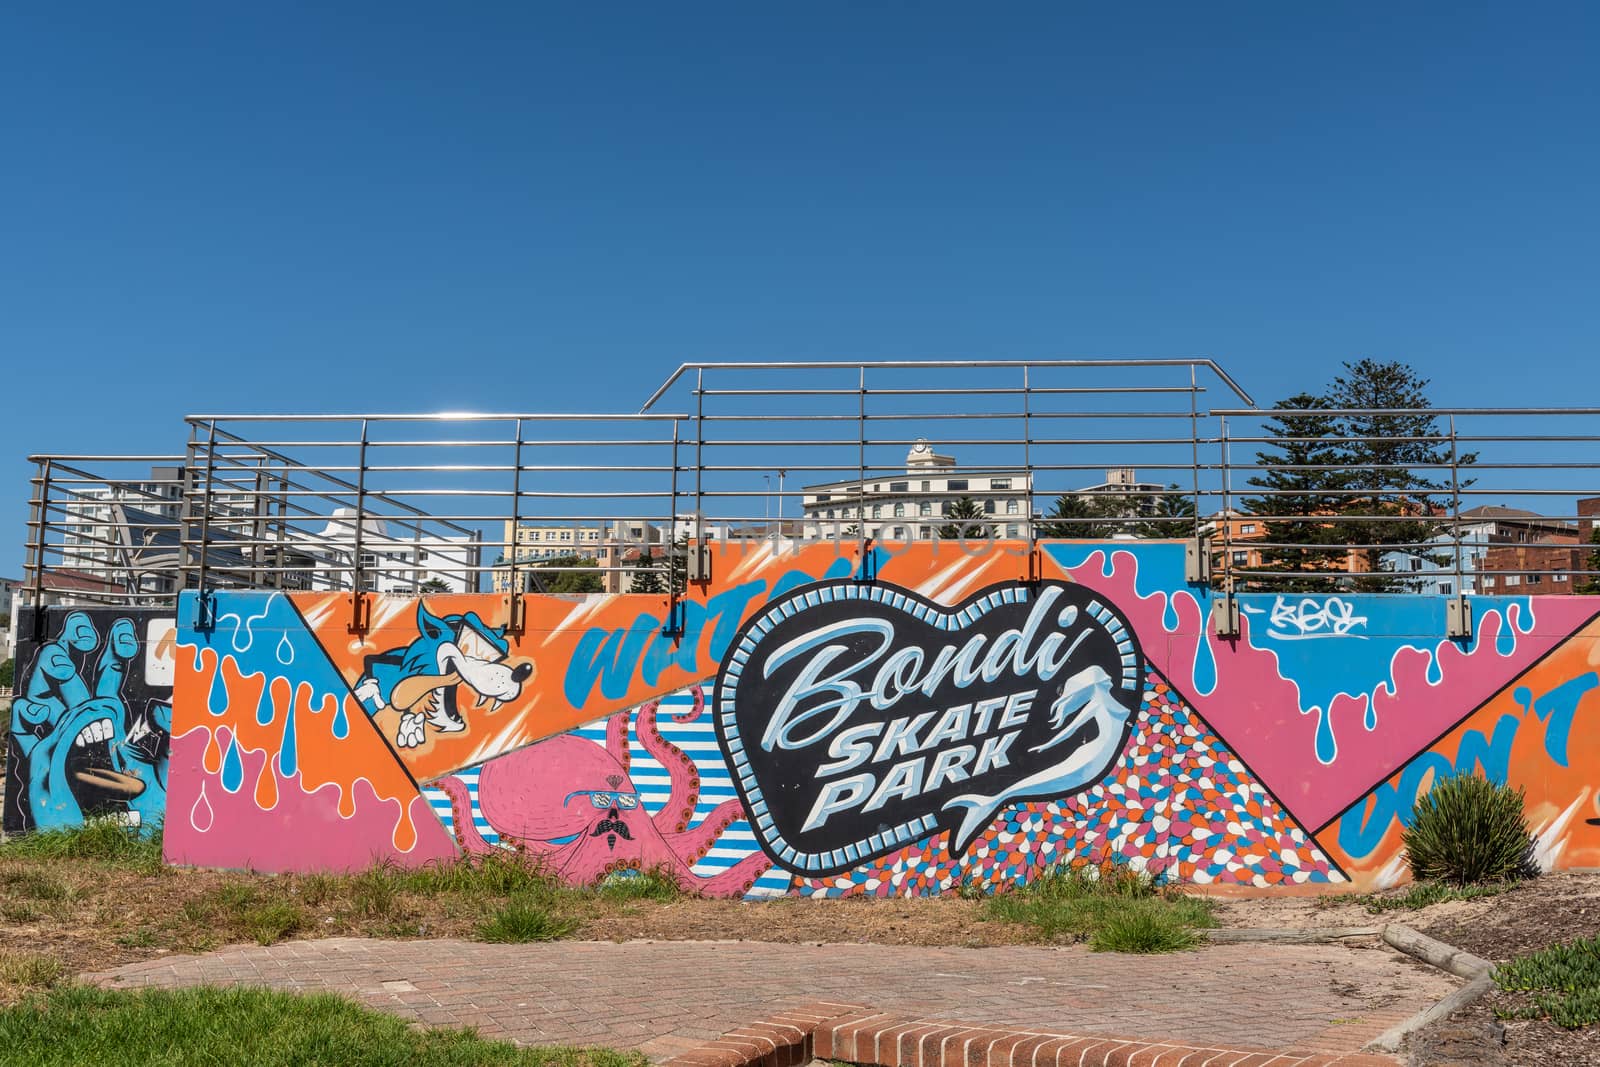 Sydney, Australia - February 11, 2019: Bondi Skate Park with colorfully painted front wall along Bondi Beach under blue sky. Green vegetation in front.